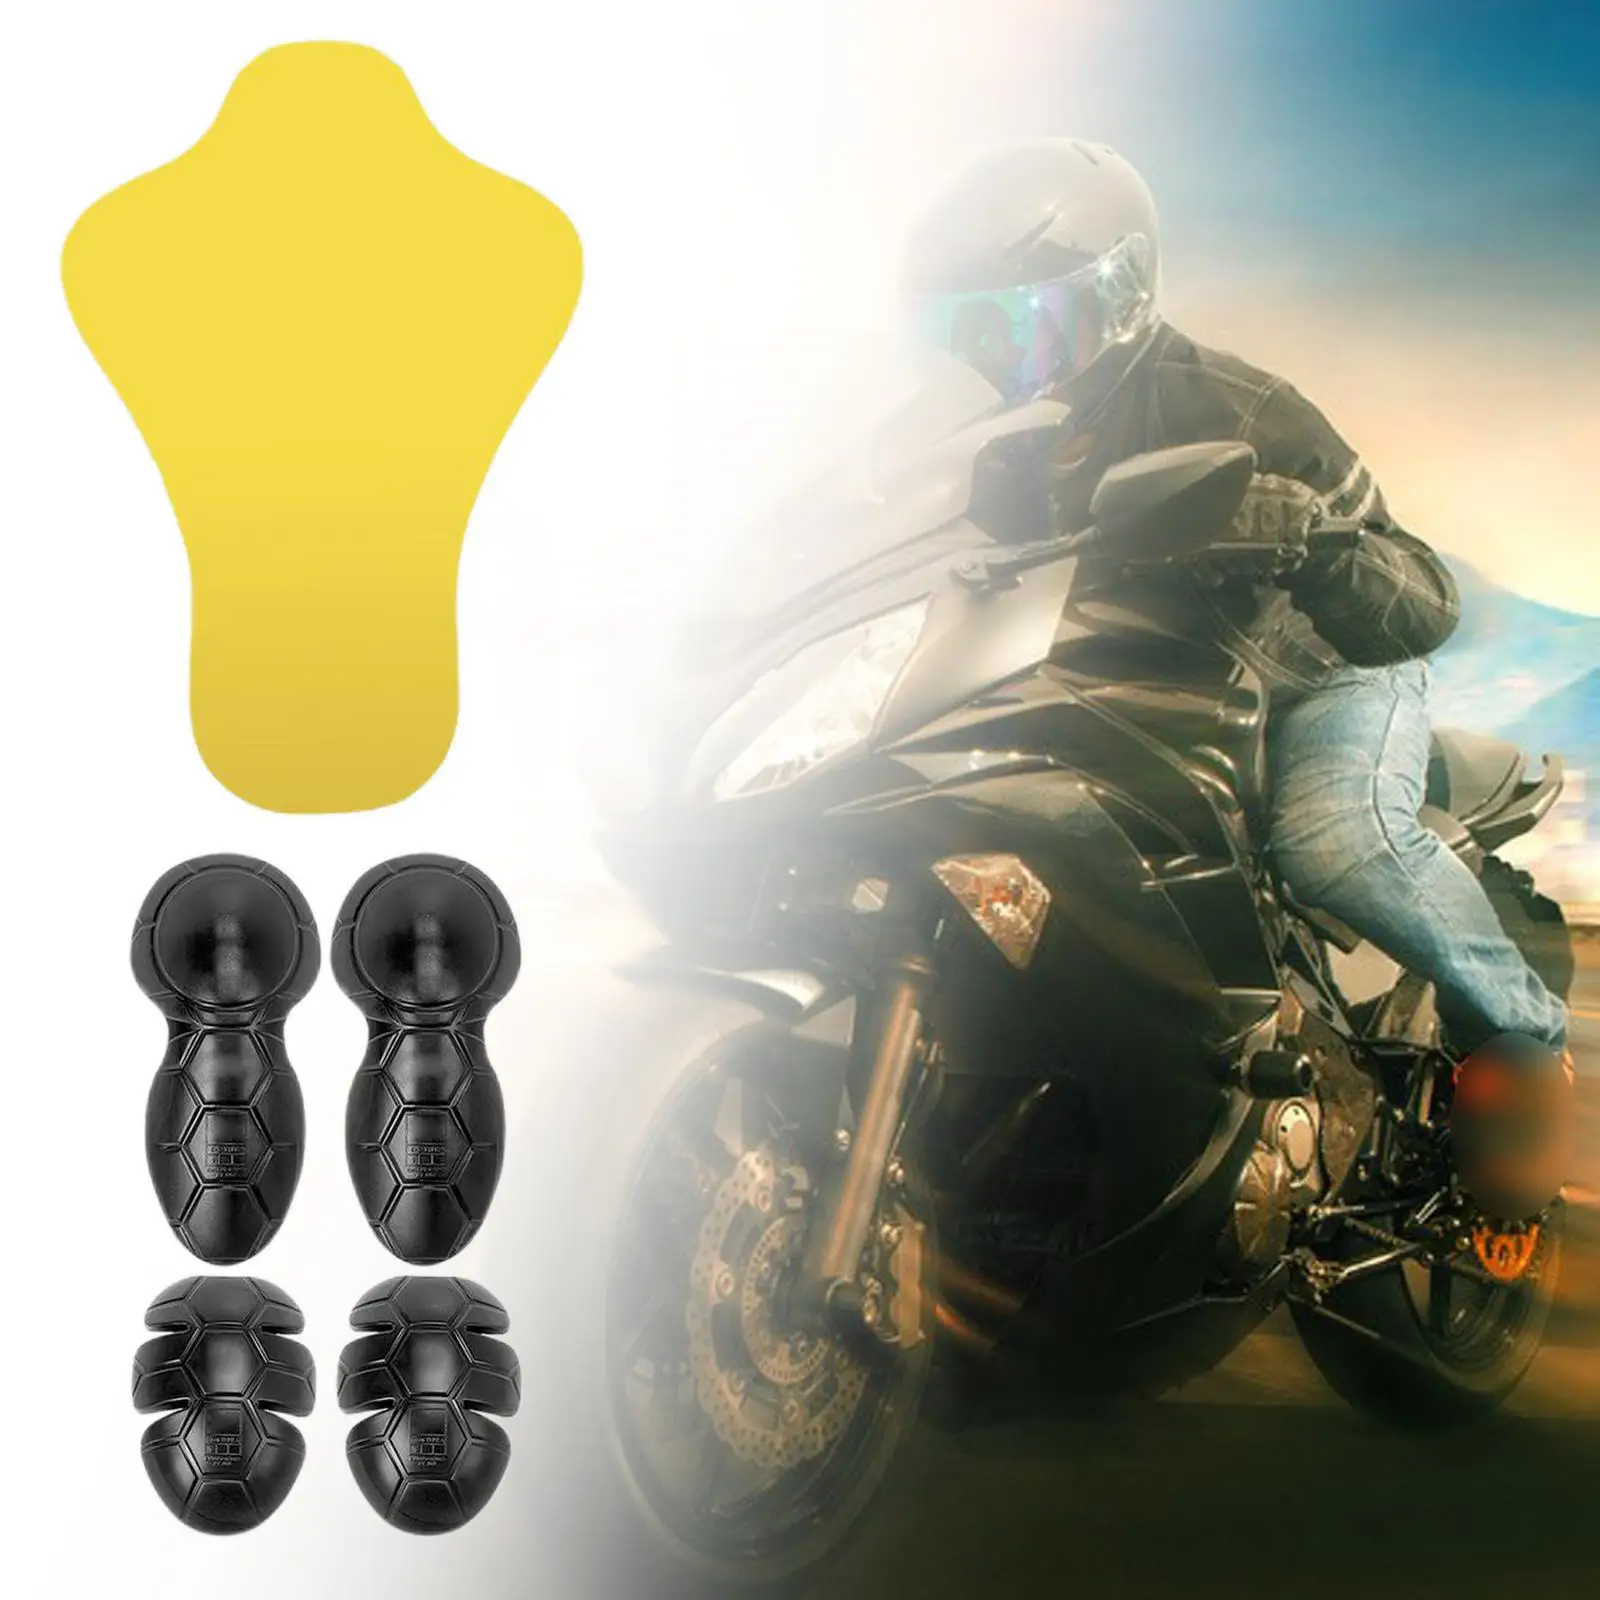 5x Motorcycle Jacket Insert Armor Protectors Set Motorcycle Accessories Motorcycle Biker Riding Motorcycle Biker Equipment